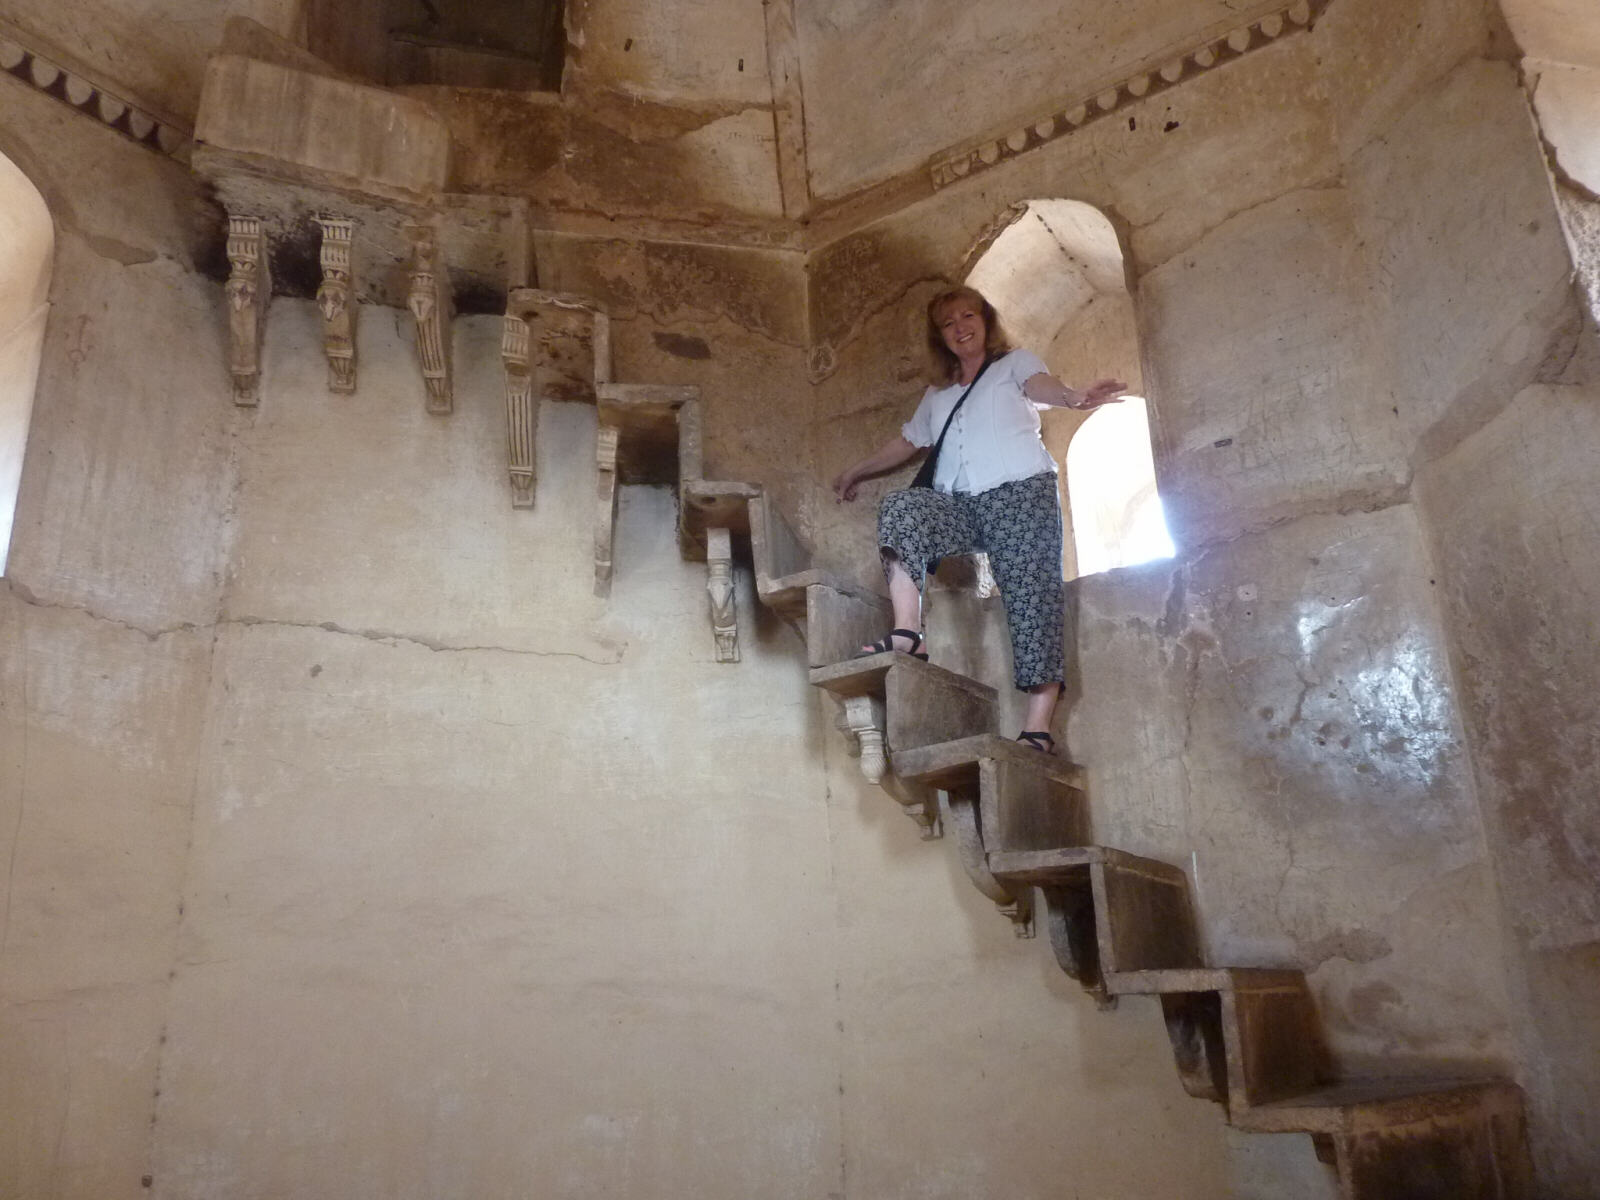 Narrow staircase in Laxminarayan temple, Orchha, India